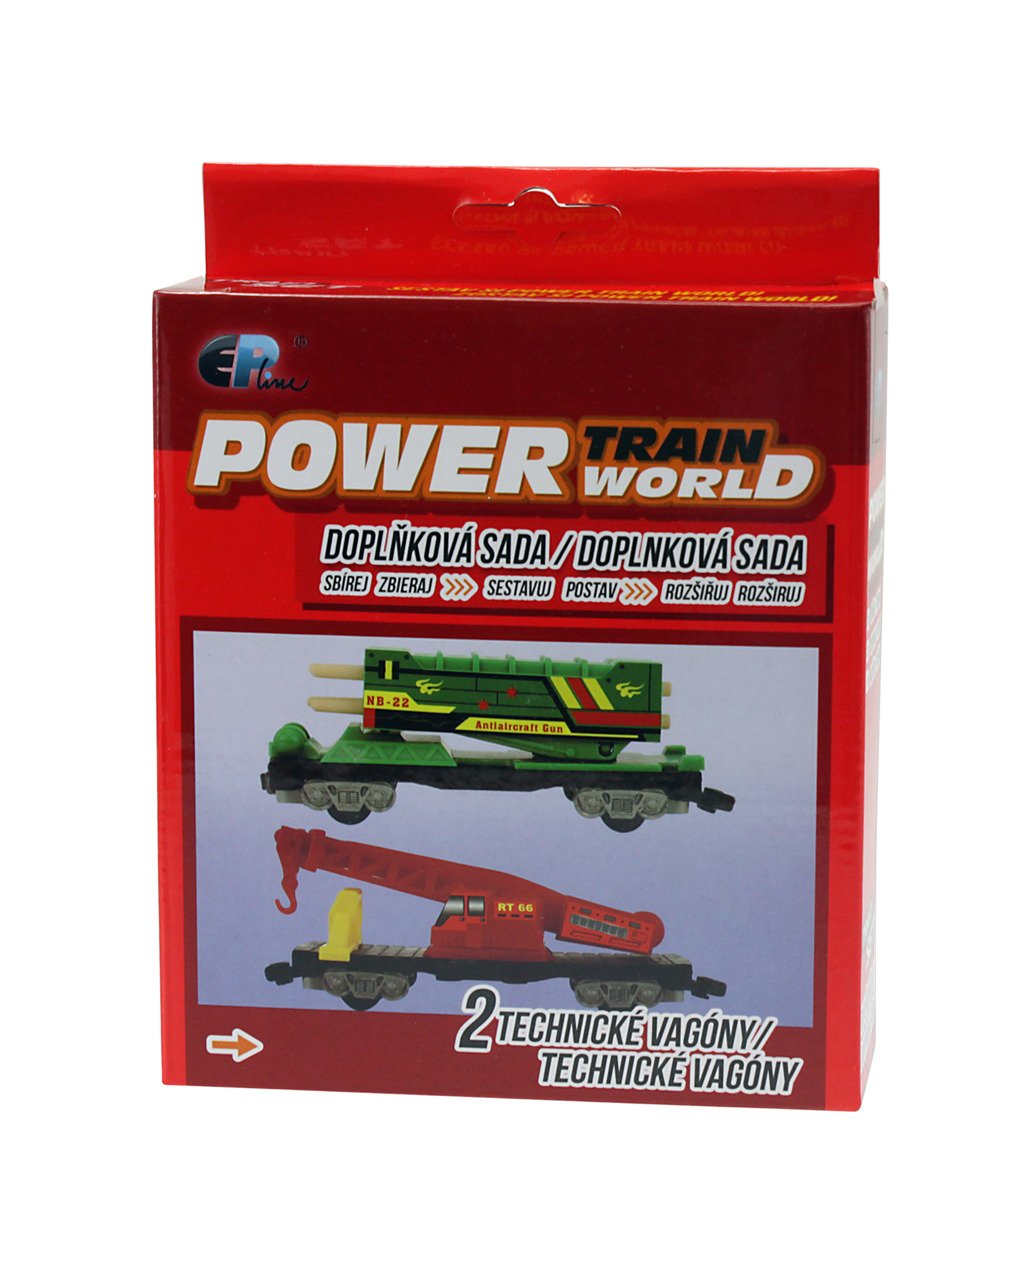 POWER TRAIN WORLD - Technické vagóny - EPEE